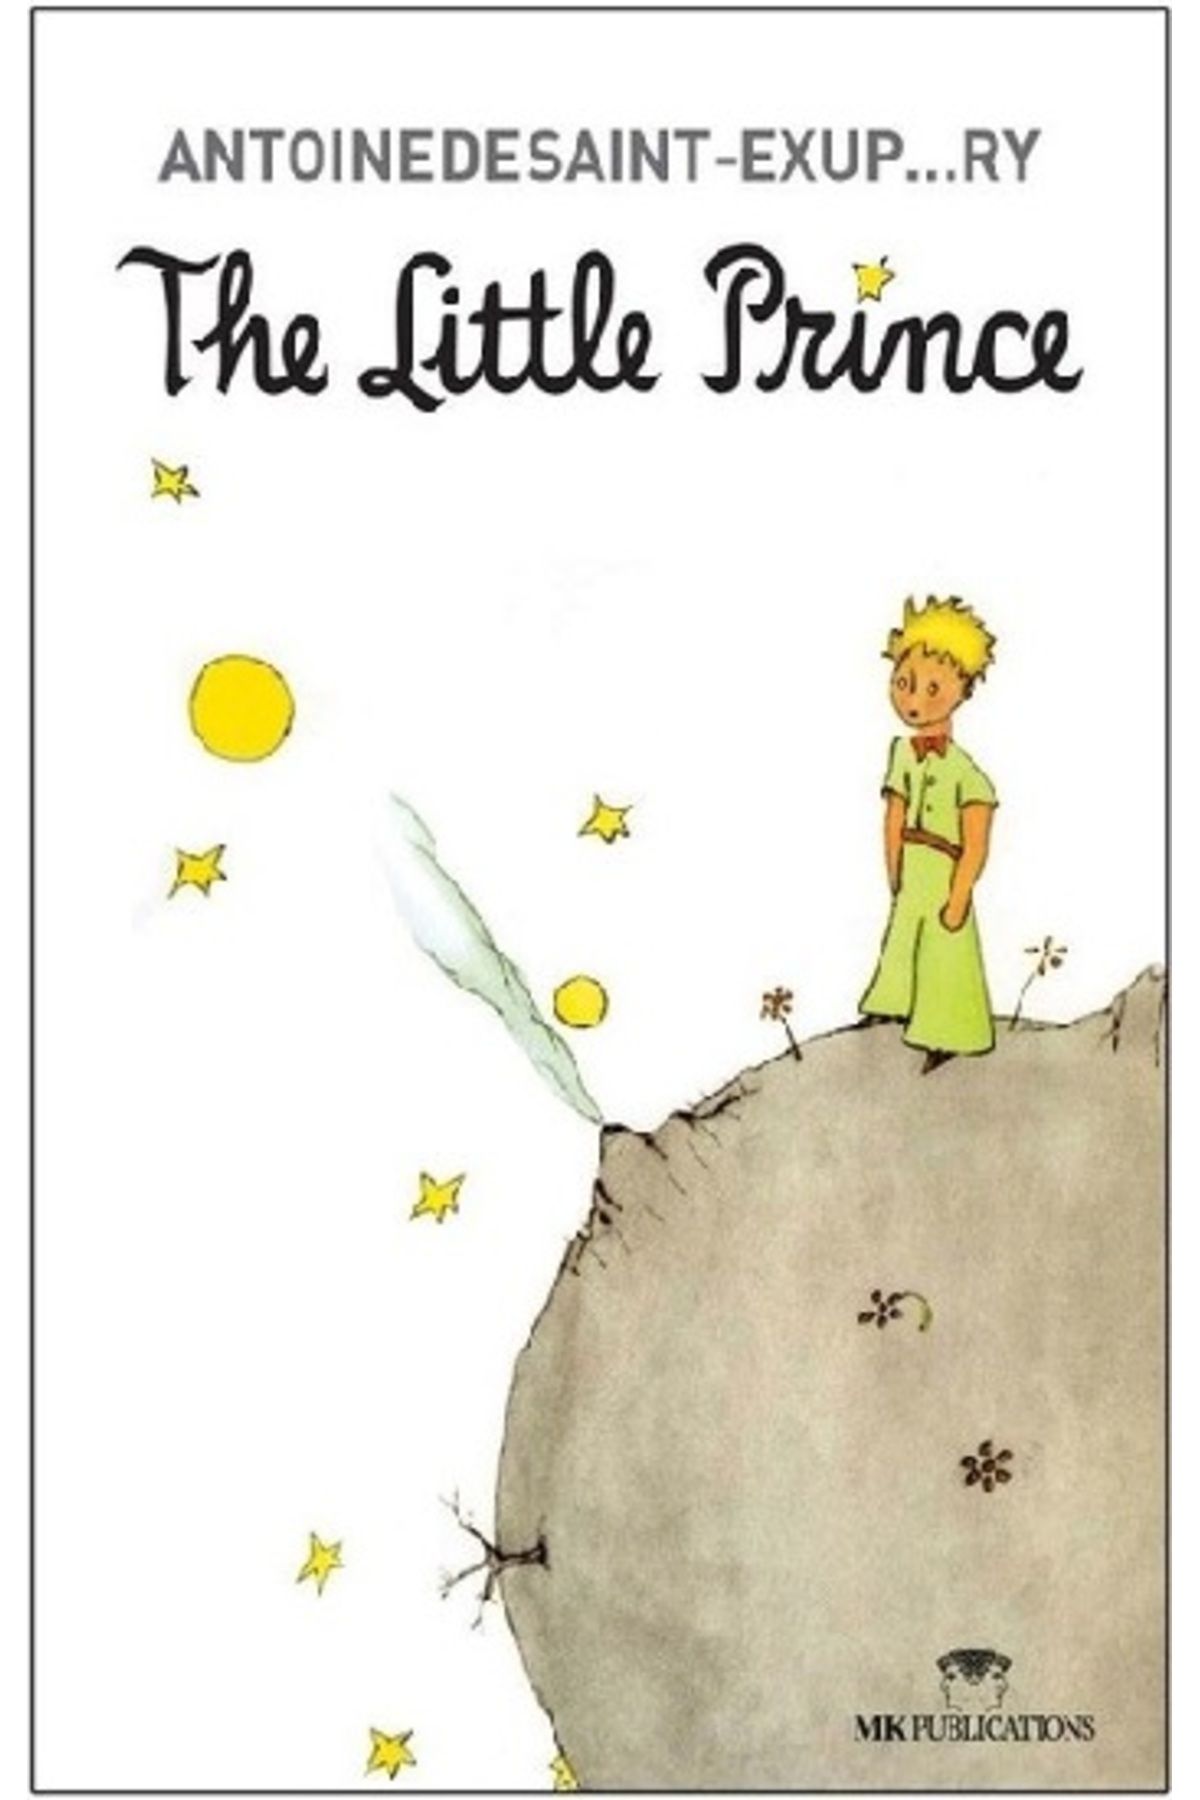 MK Publications The Little Prince